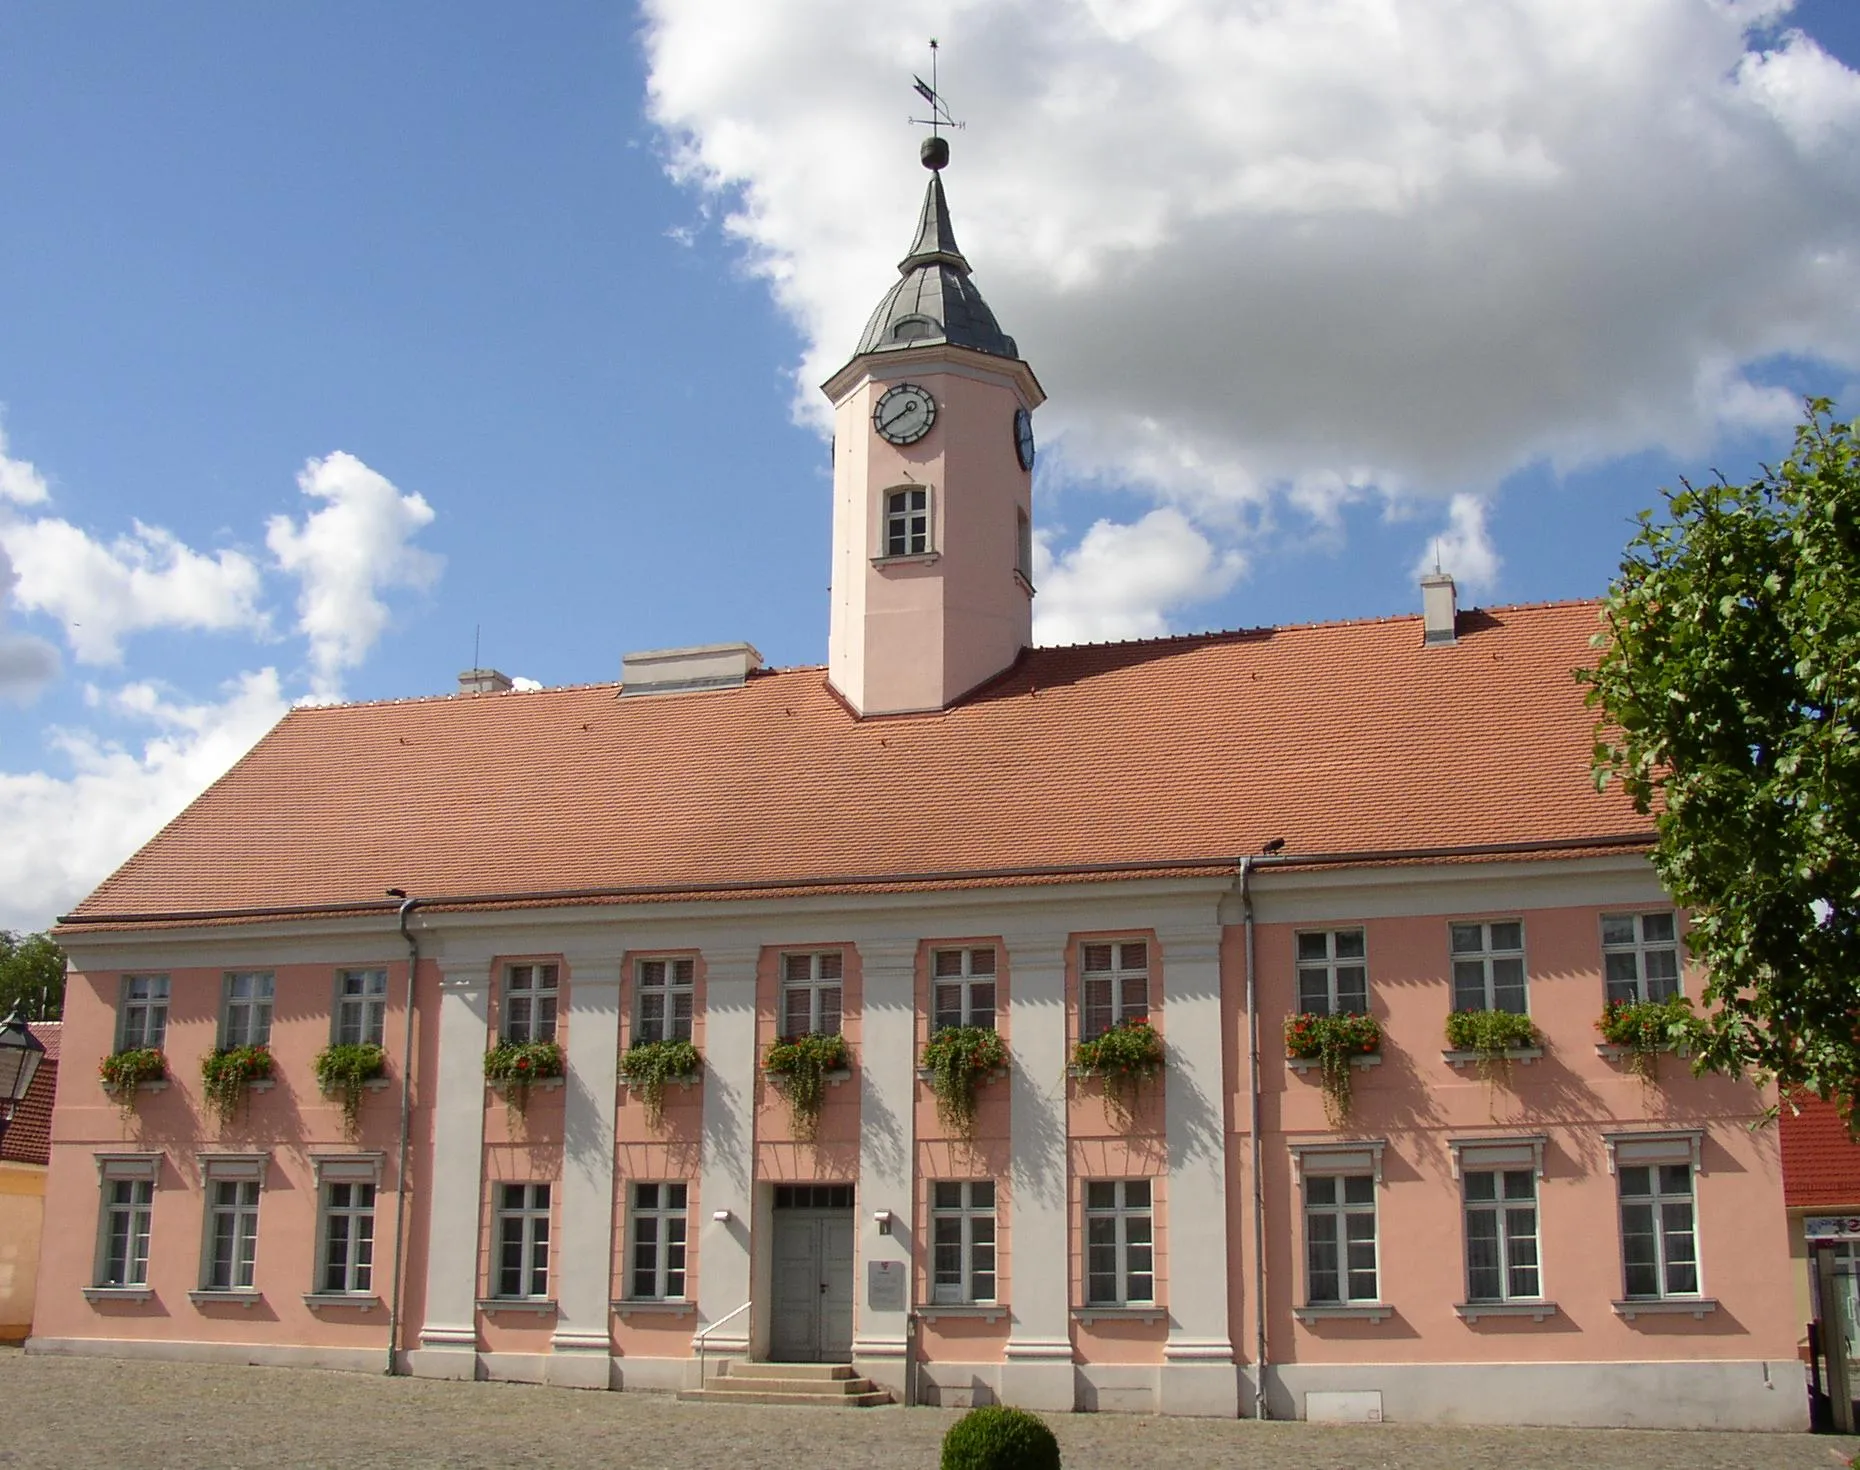 Photo showing: Town hall in Zehdenick in Brandenburg, Germany